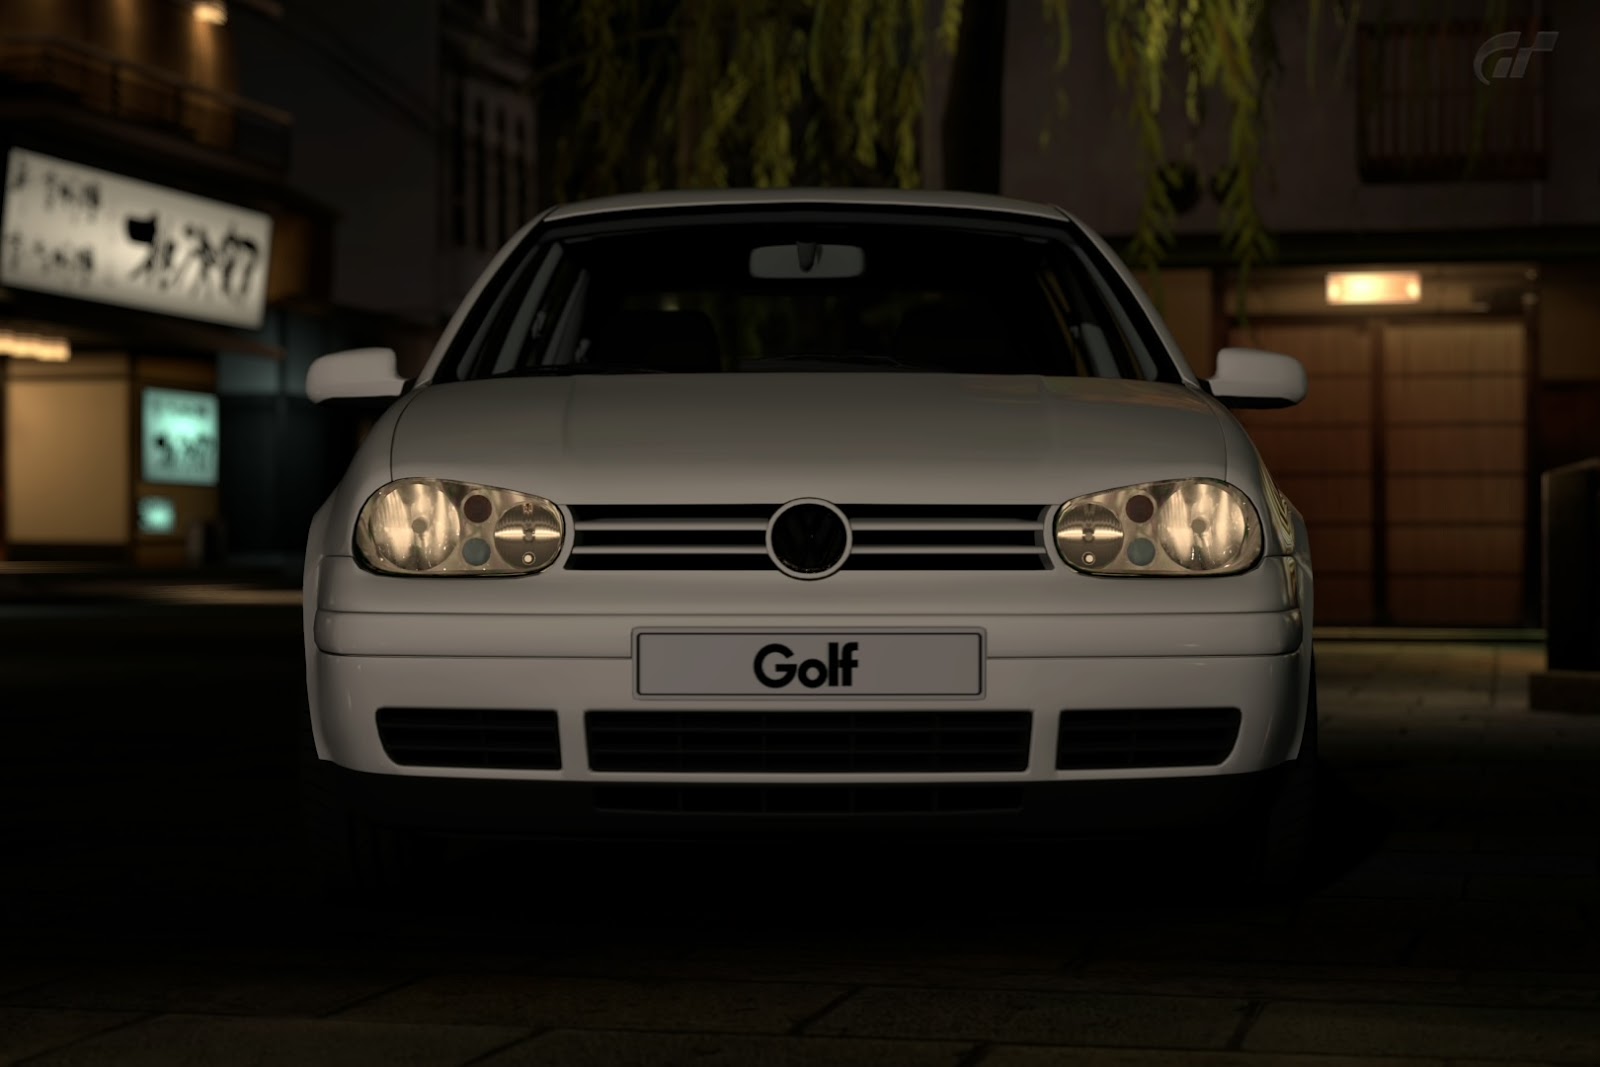 VW Golf GTI (Mk4)  PH Used Review - PistonHeads UK